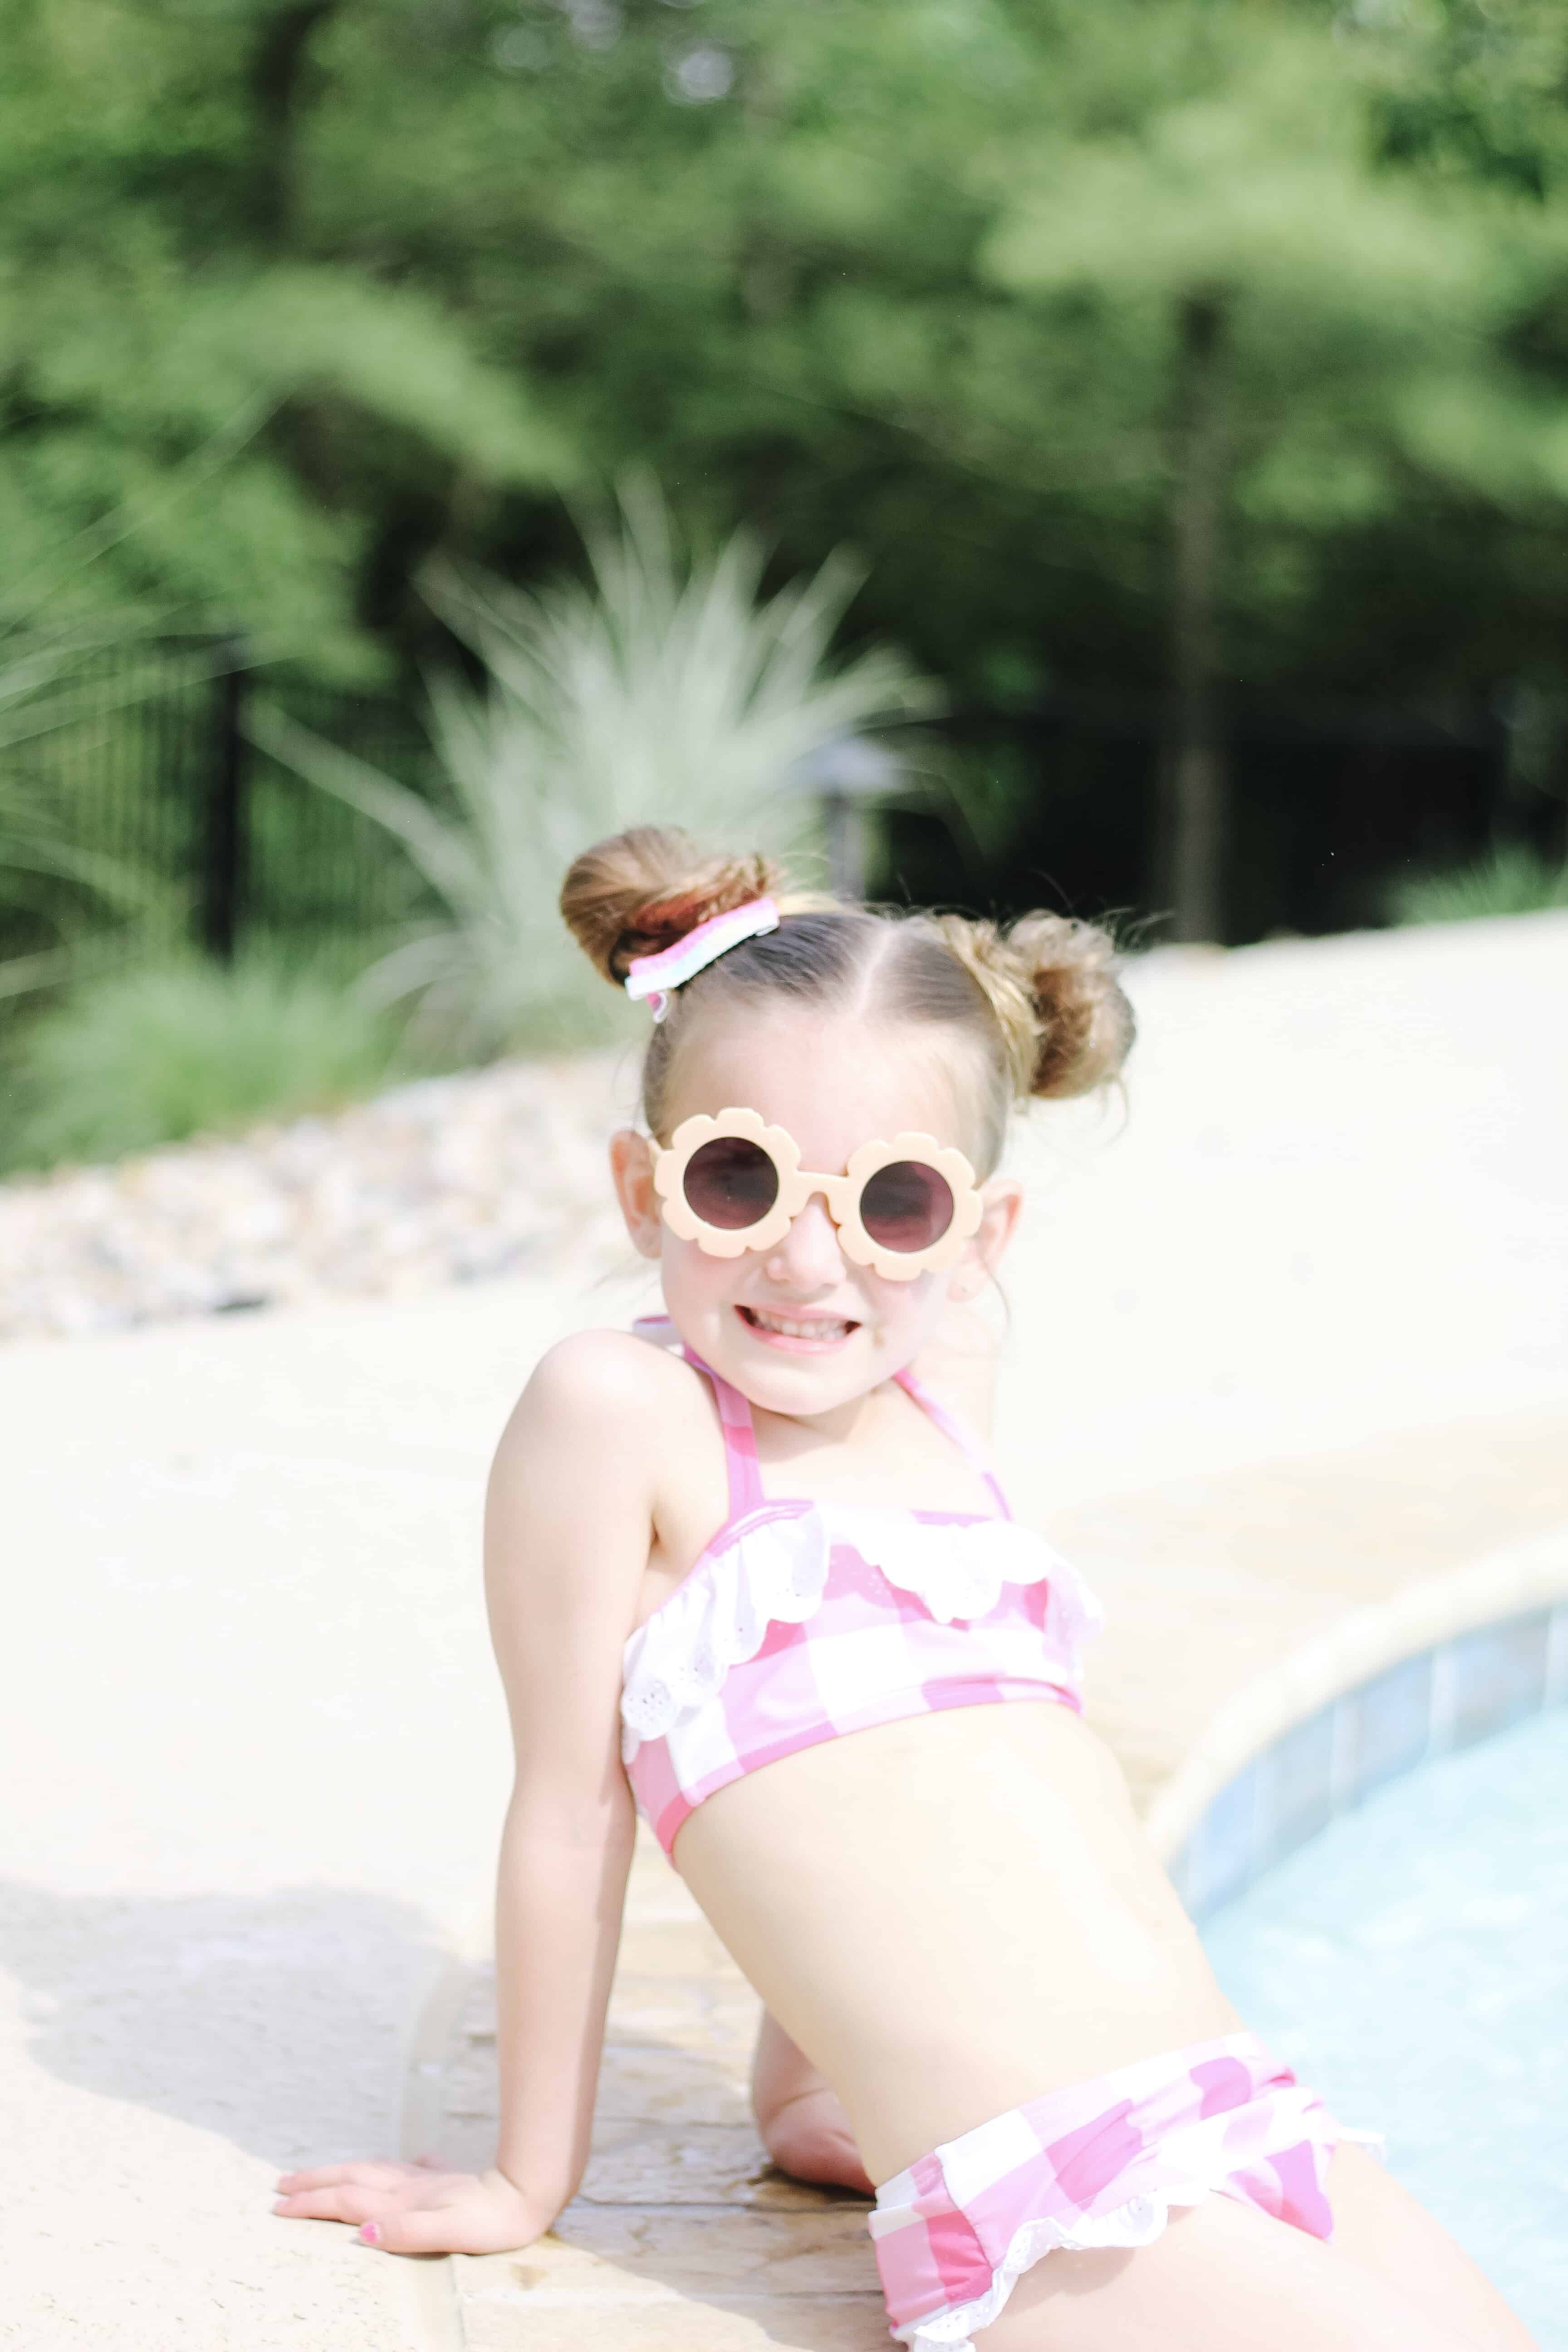 Toddler girl in flower sunglasses by pool